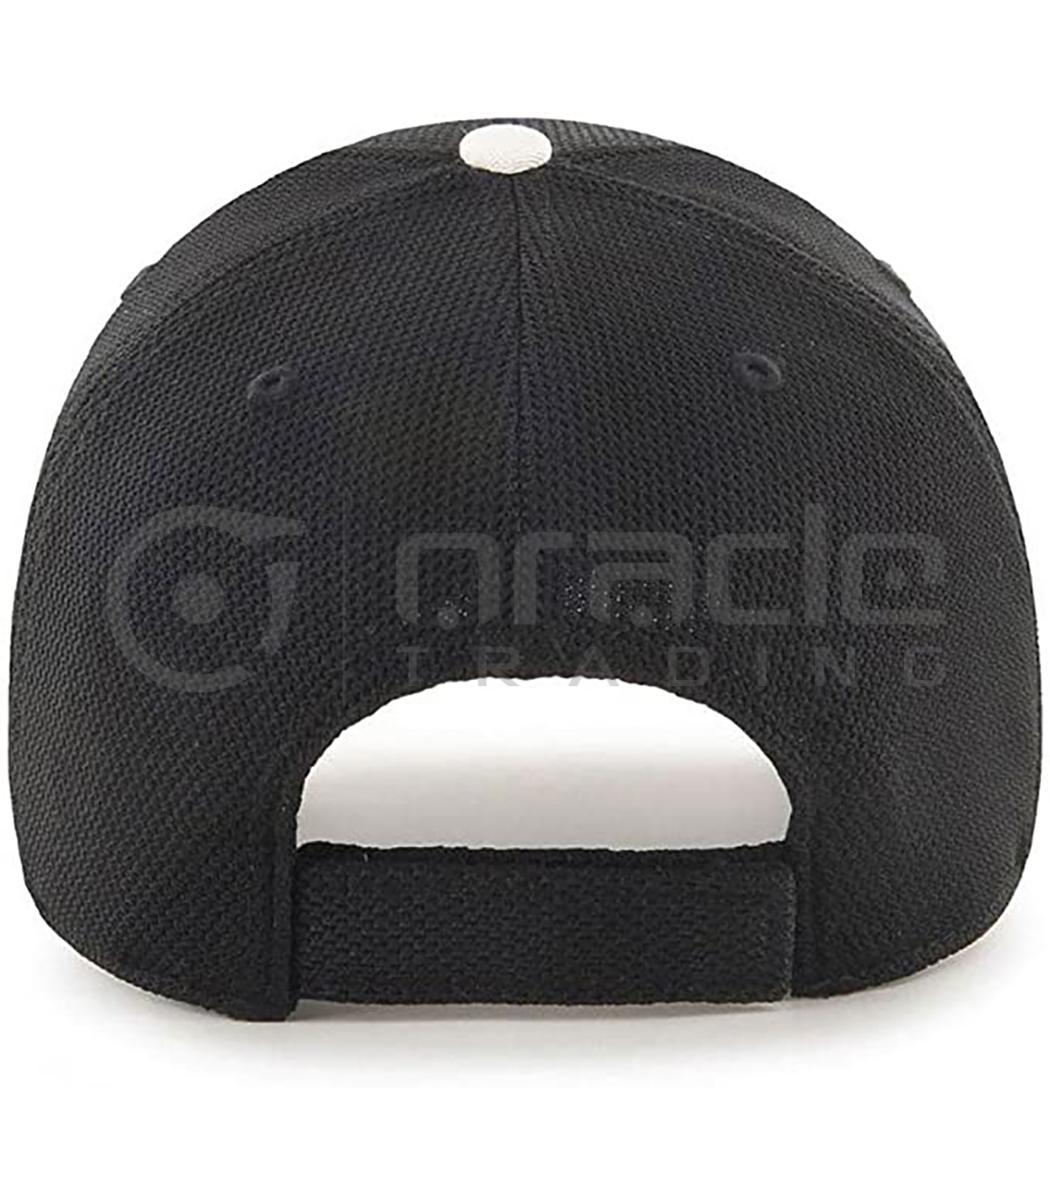 crest hat liverpool black white hat045 c